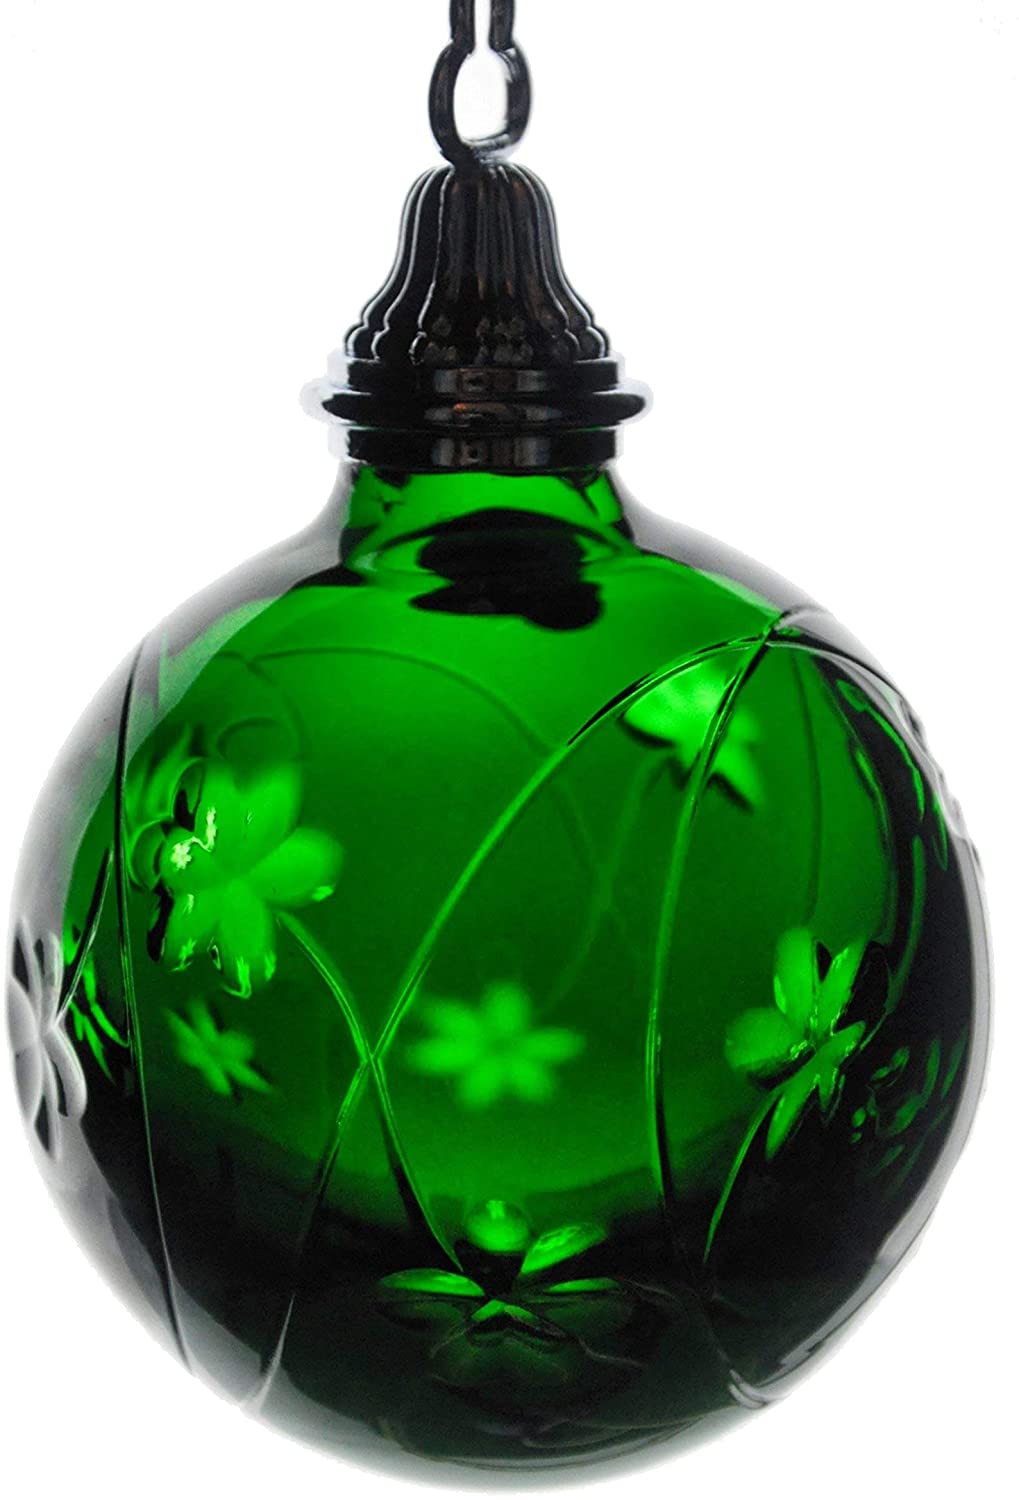 waterford-emerald-green-shamrock-ball-ornament-2006-first-in-series-140023.jpg